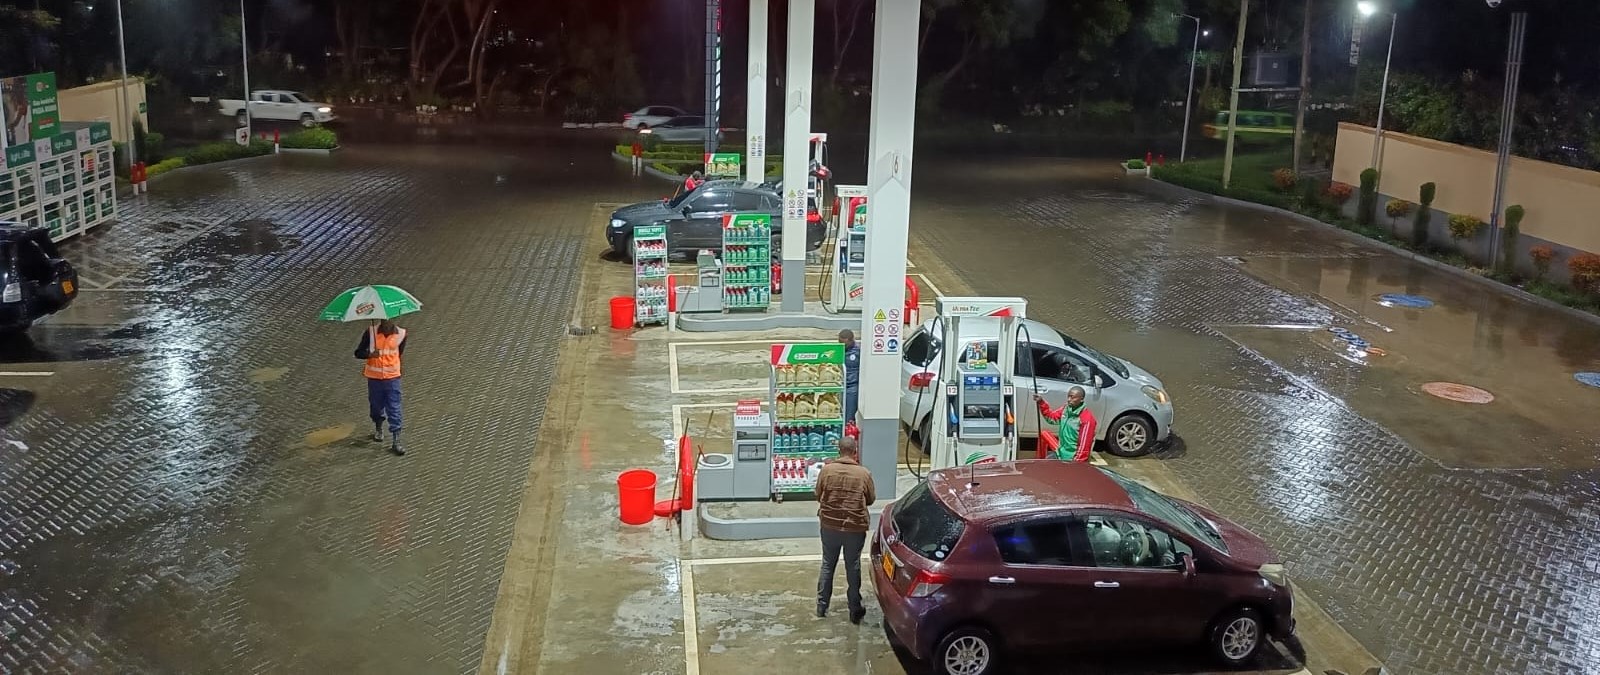 Petrol station attendants at work at Rubis in Lavington, Nairobi. (Photo: John Mbati)